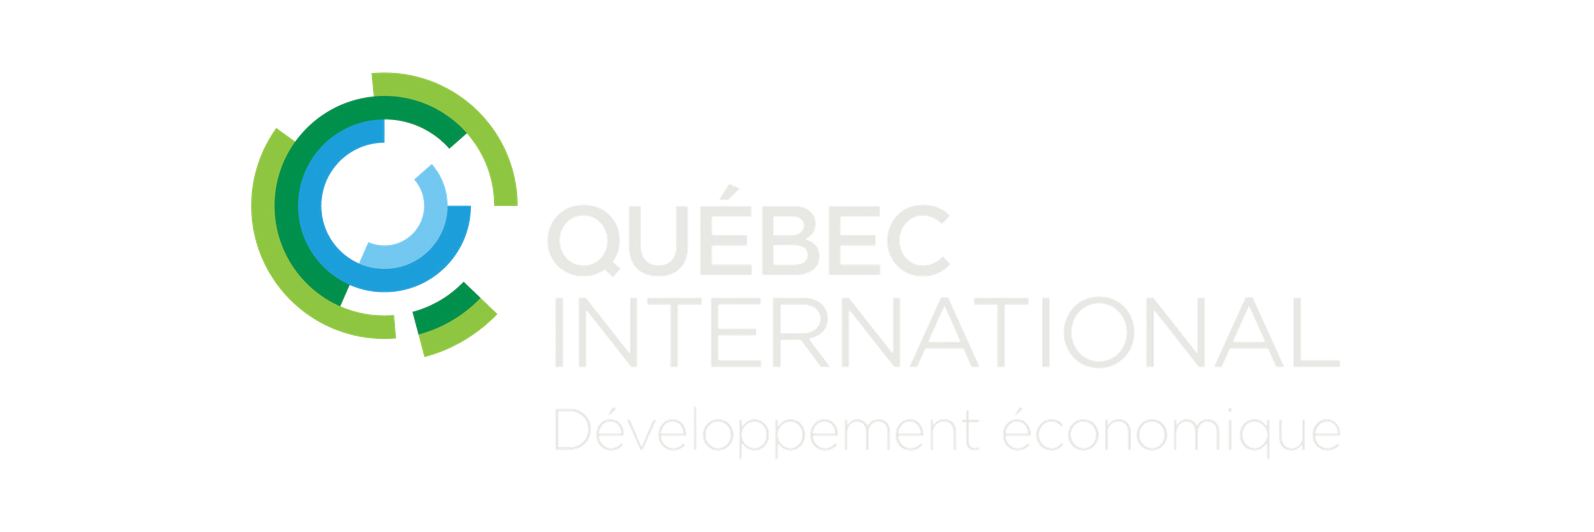 Quebec Internacional